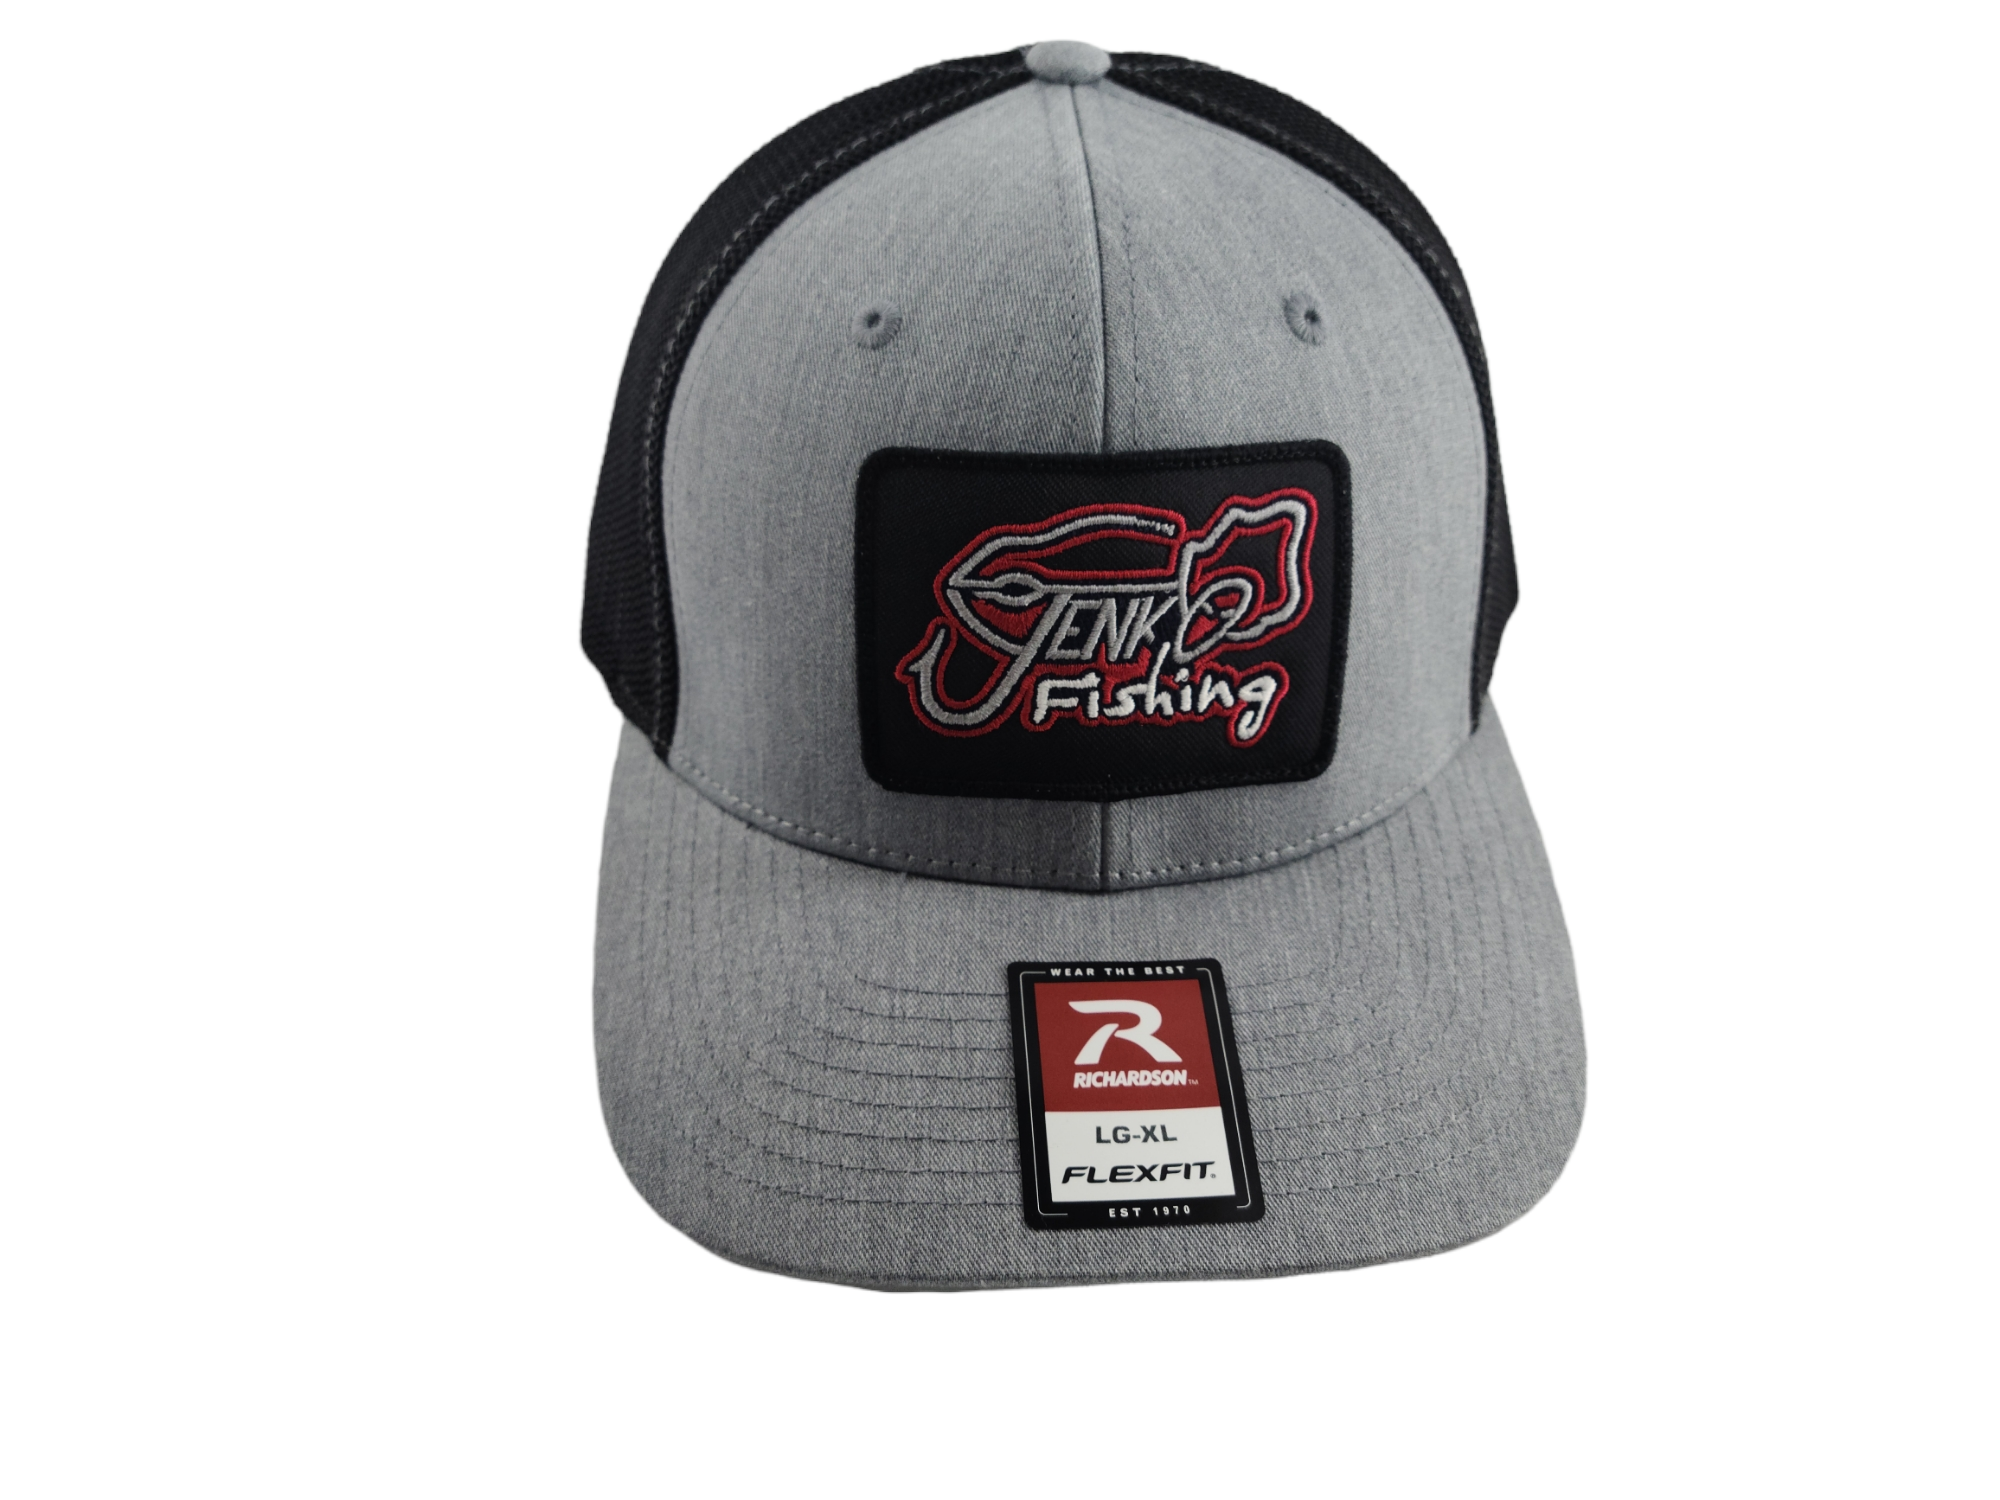 Richardson Hats – Jenko Fishing